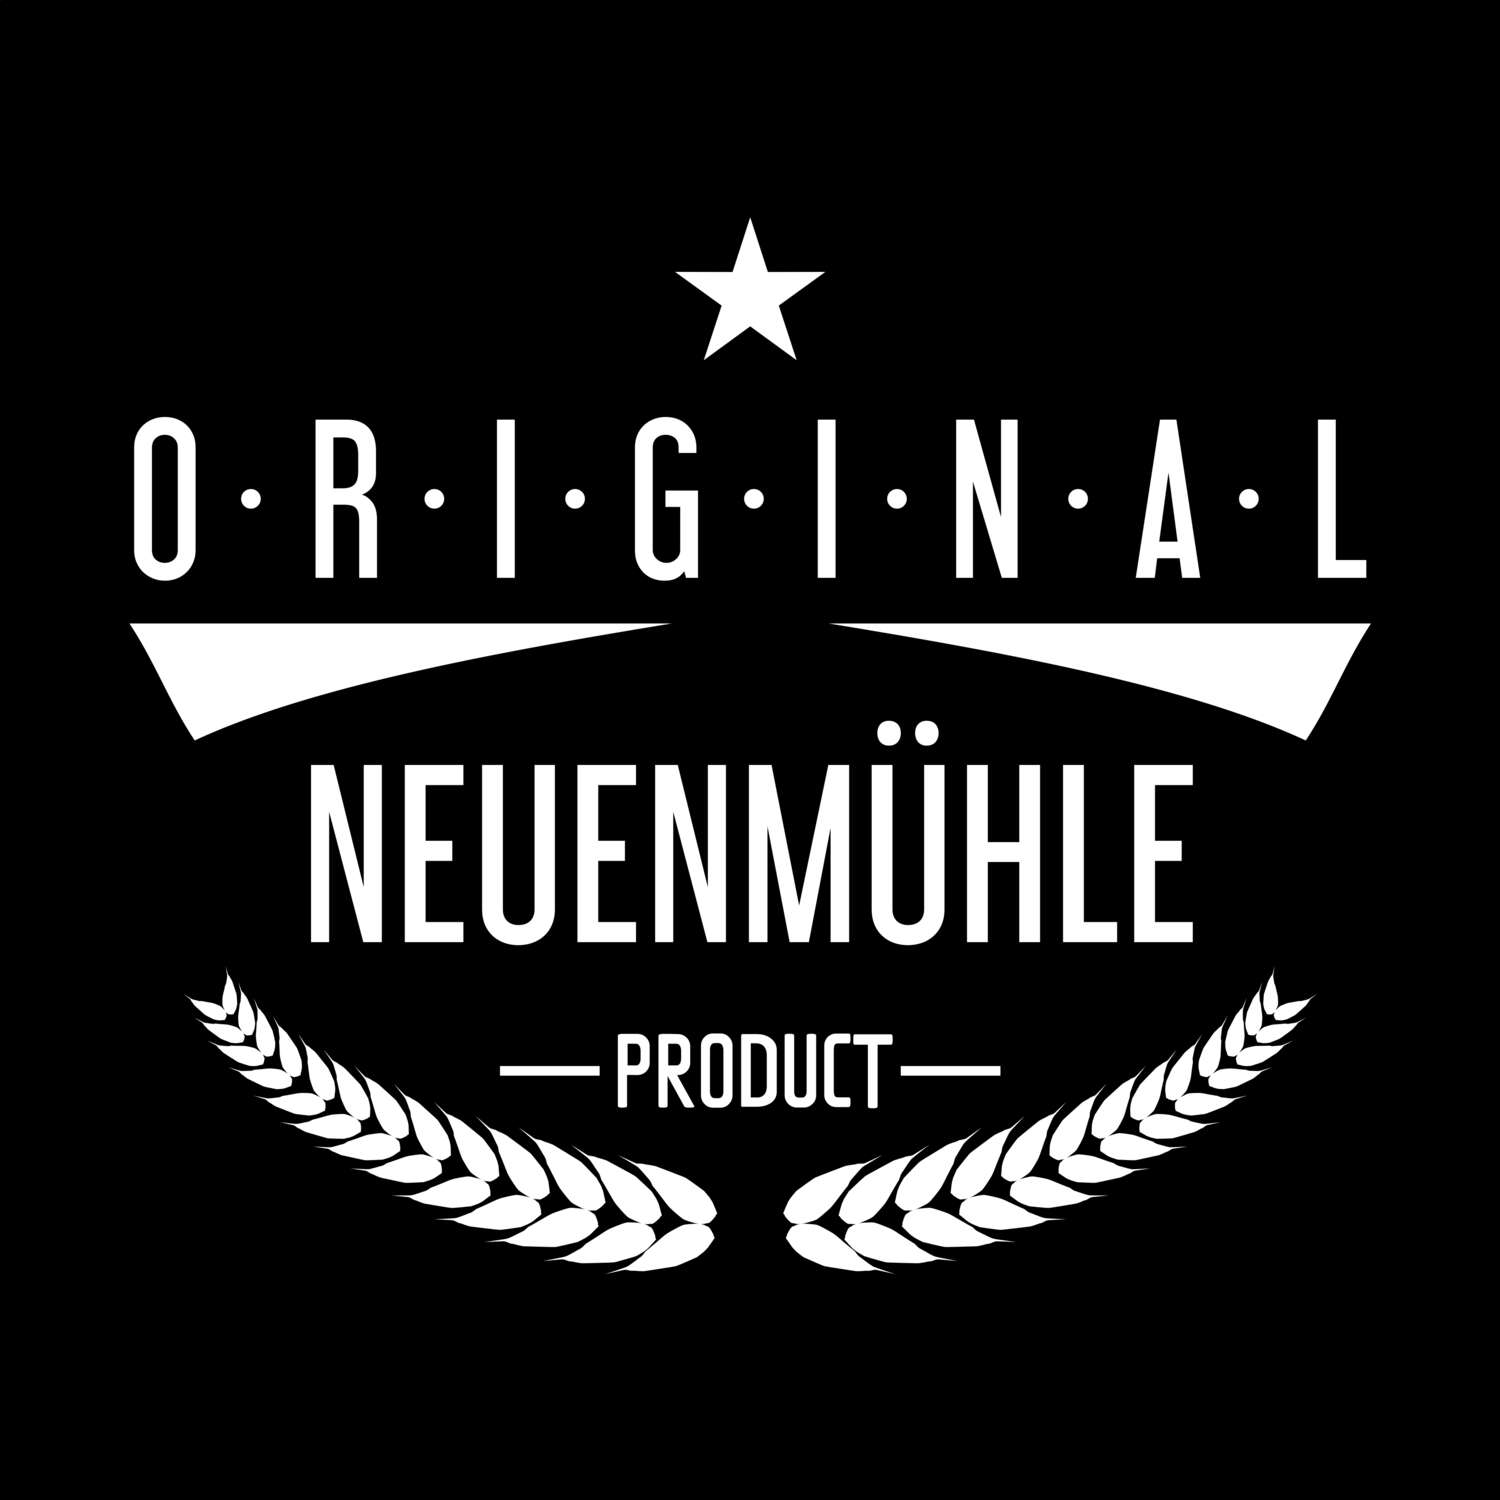 Neuenmühle T-Shirt »Original Product«